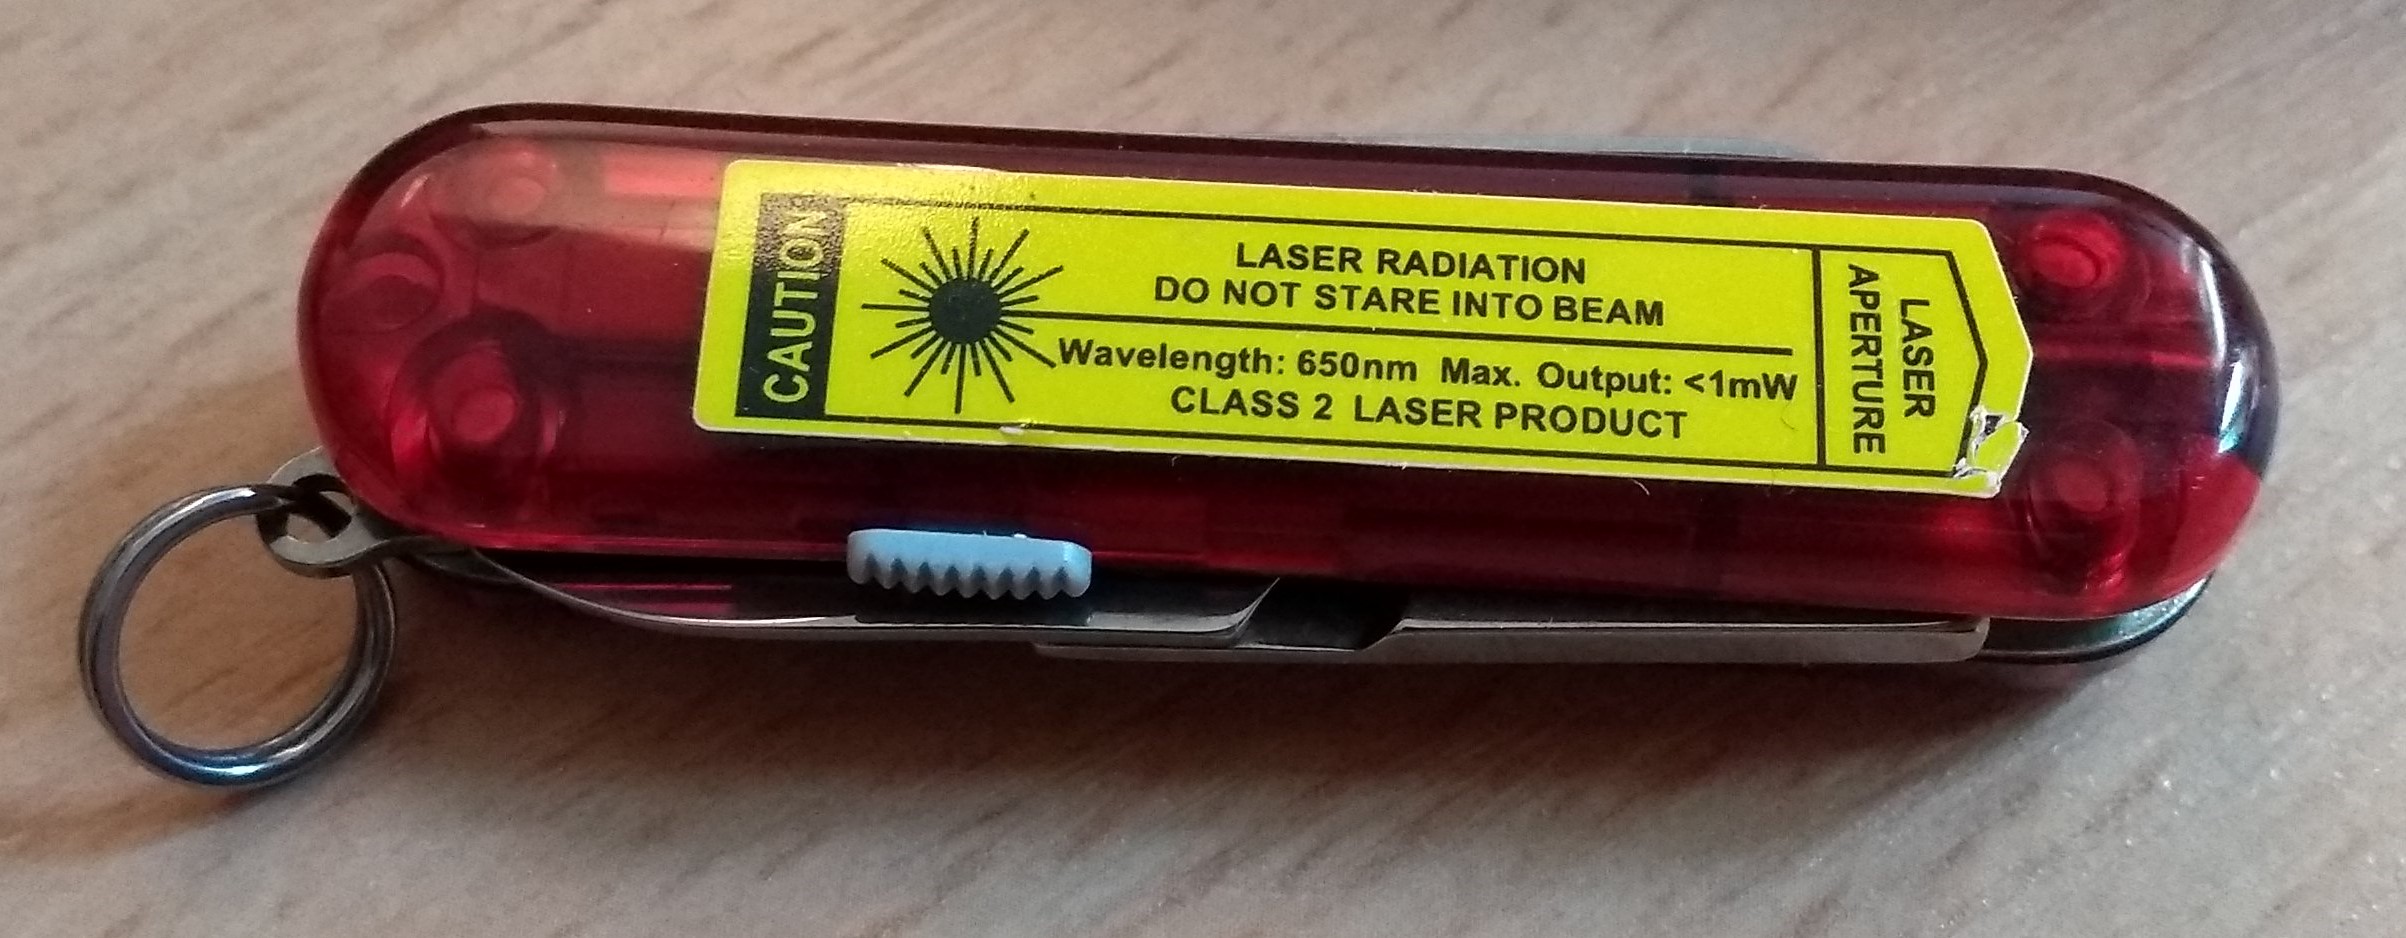 Victorinox Laser Warning Label